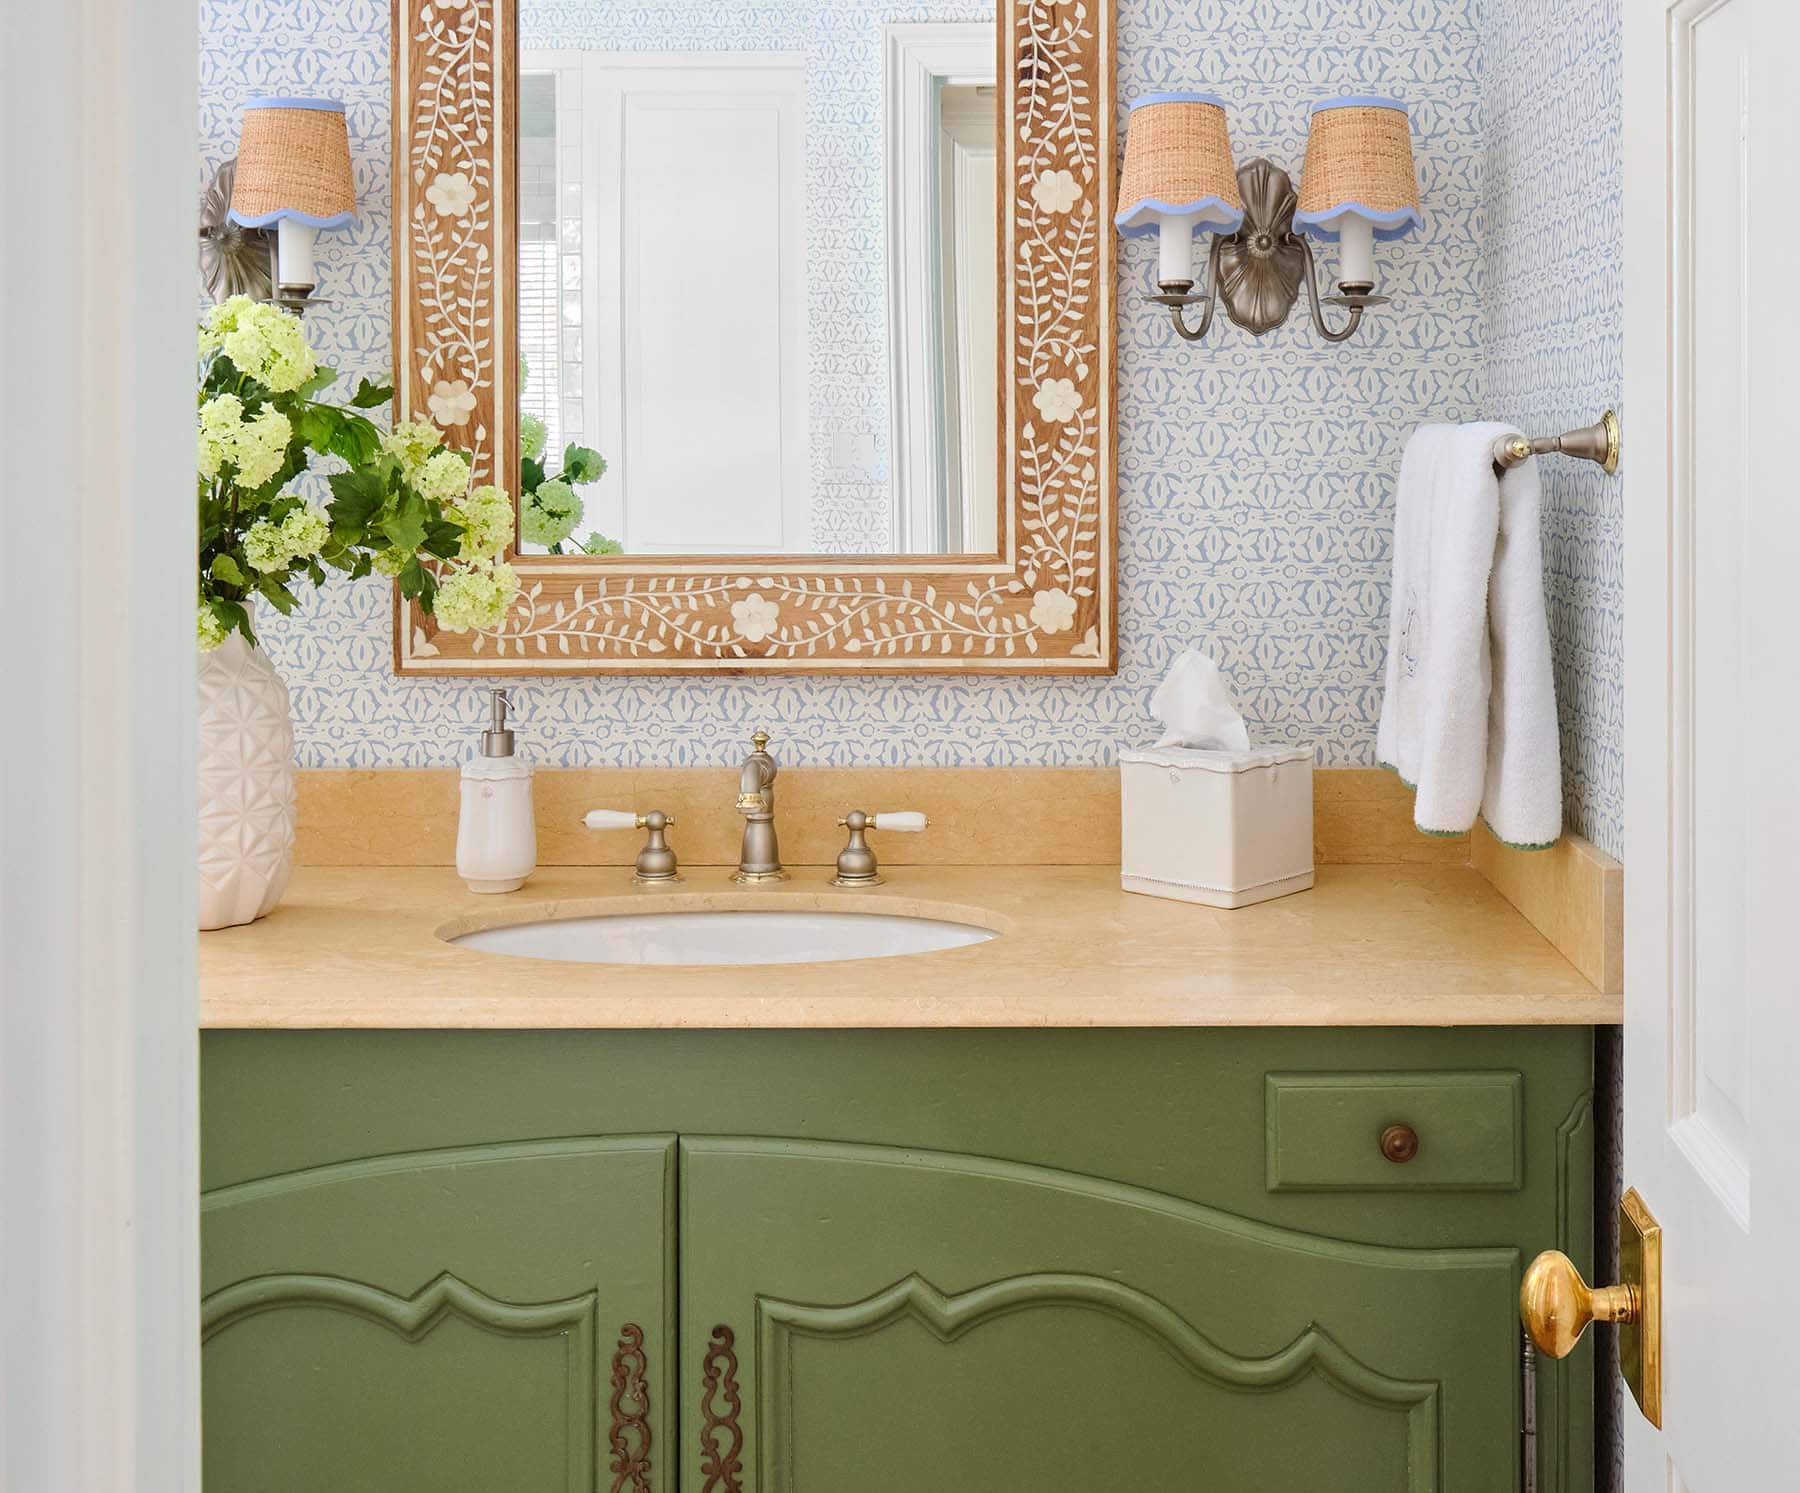 wallpapered-bathroom-green-vanity-paper-moon-painting-installer